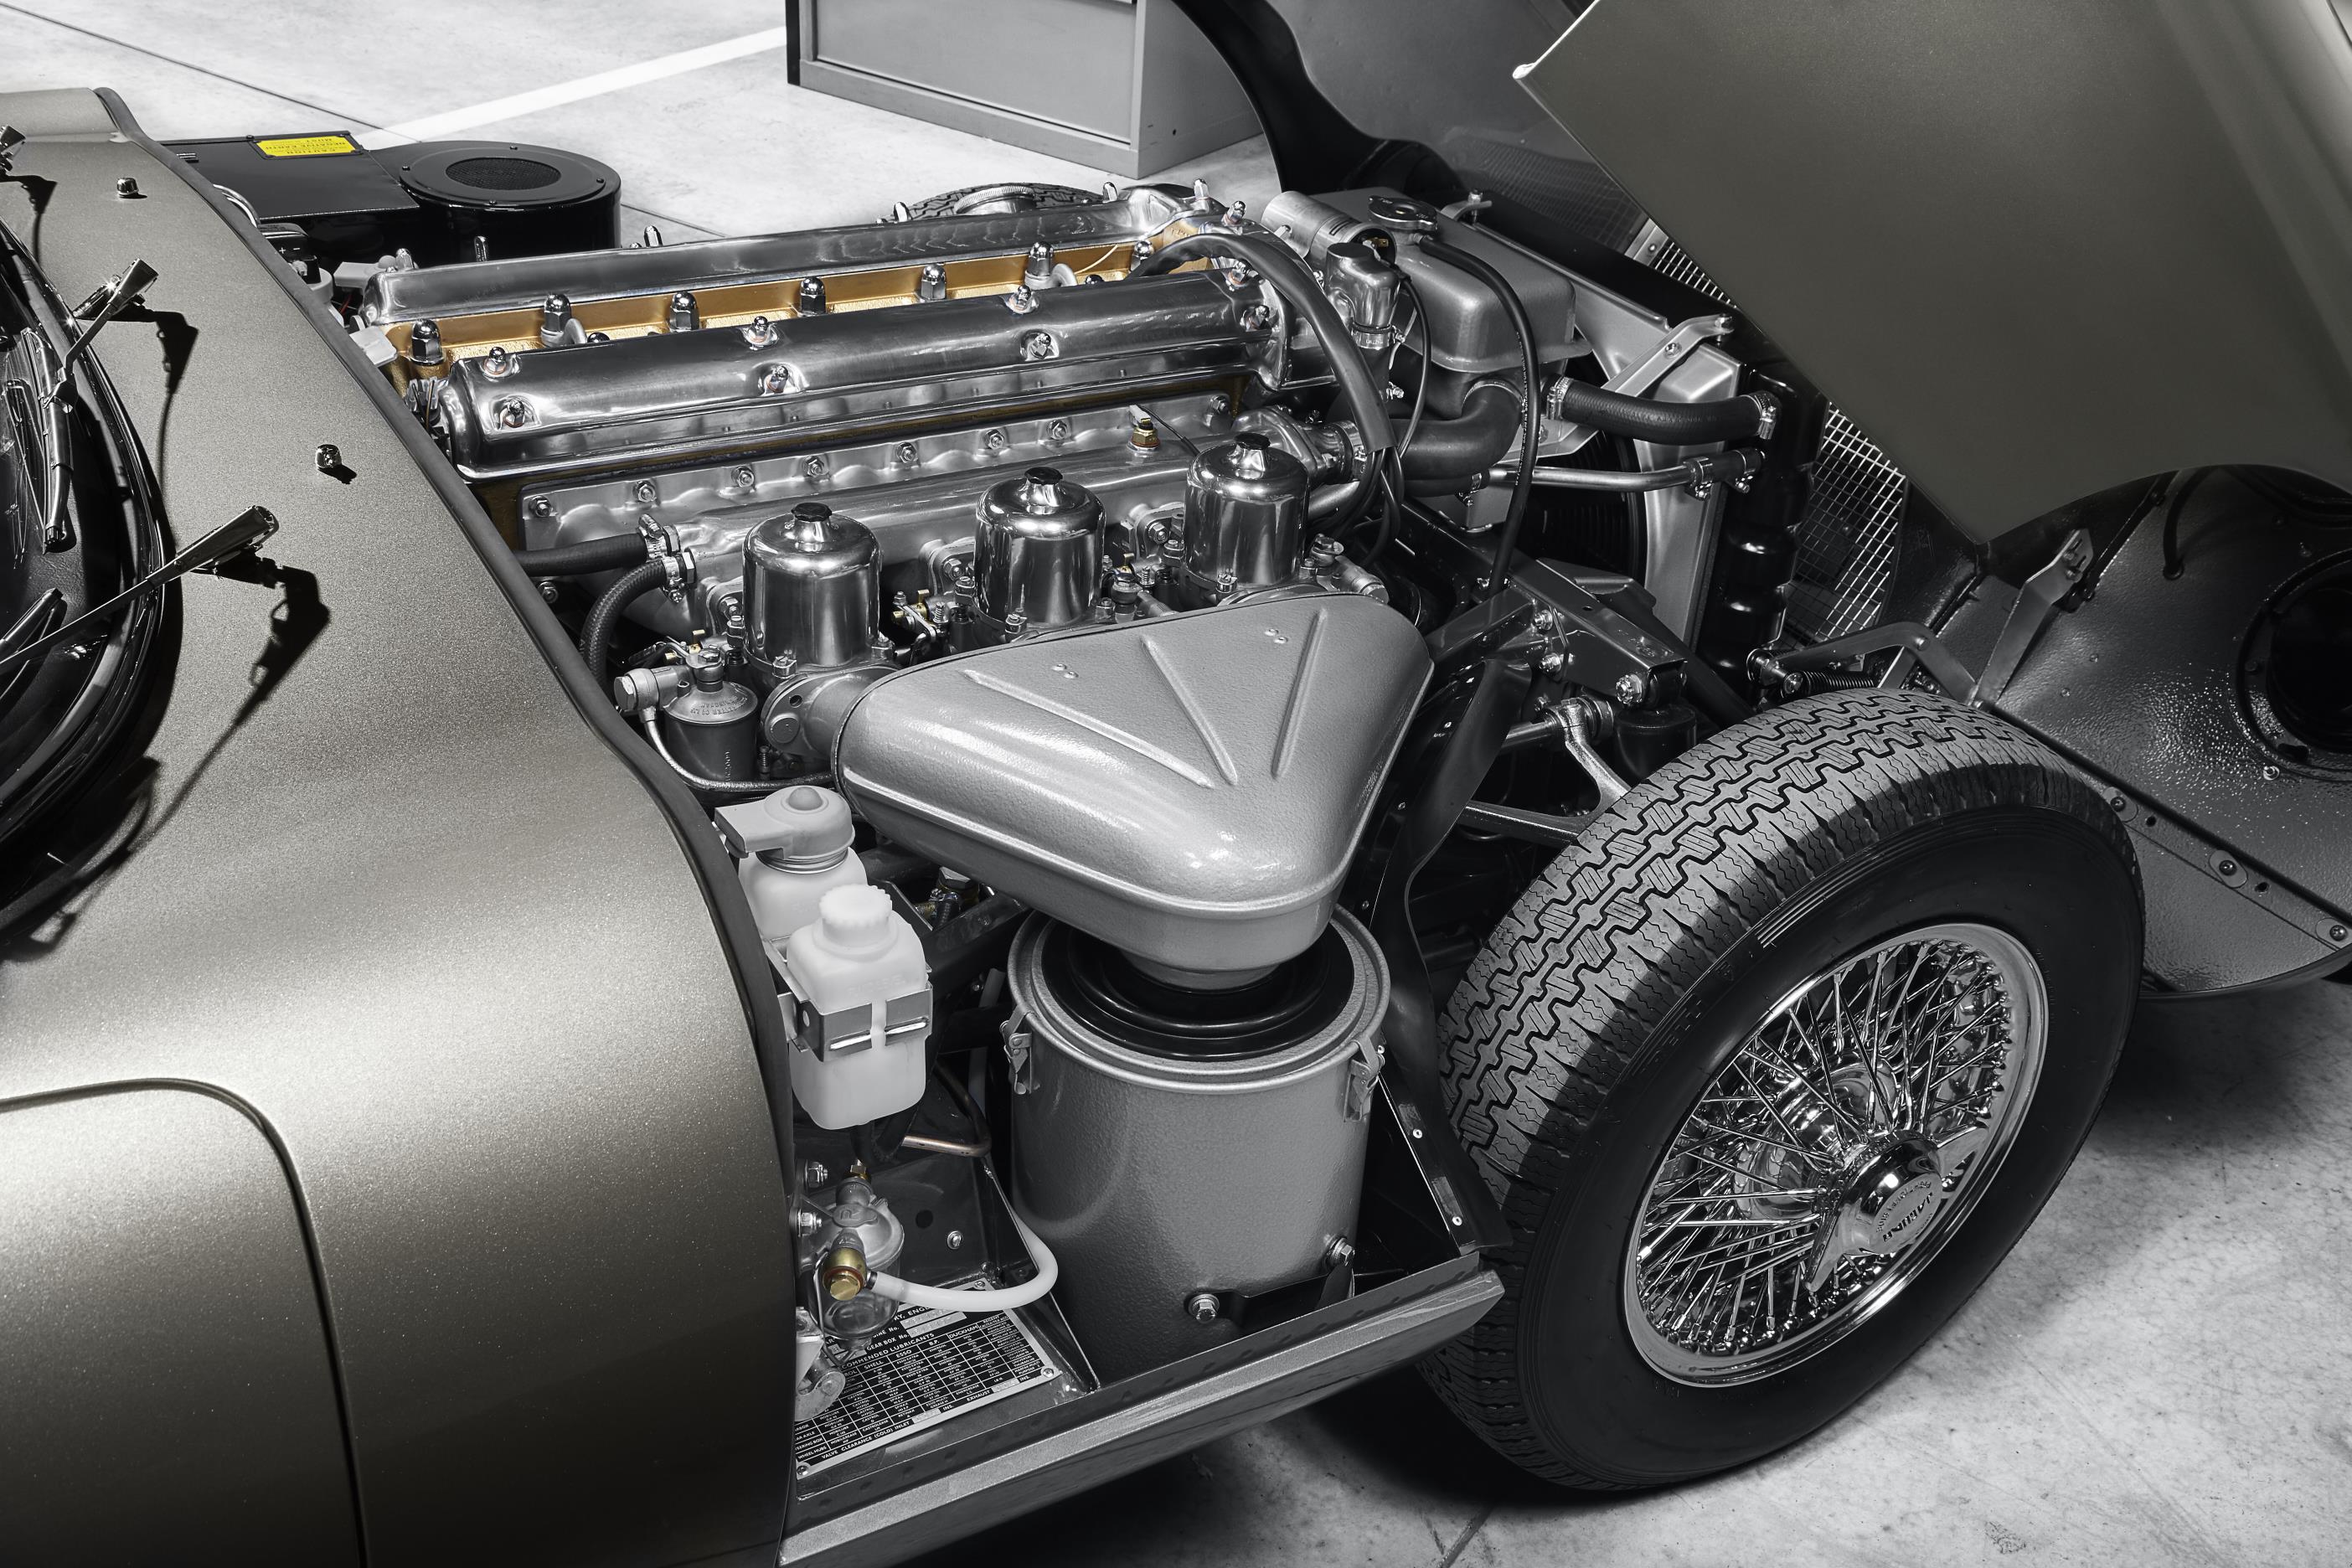 Jaguar Classic to debut first ‘Reborn’ E-type at Essen